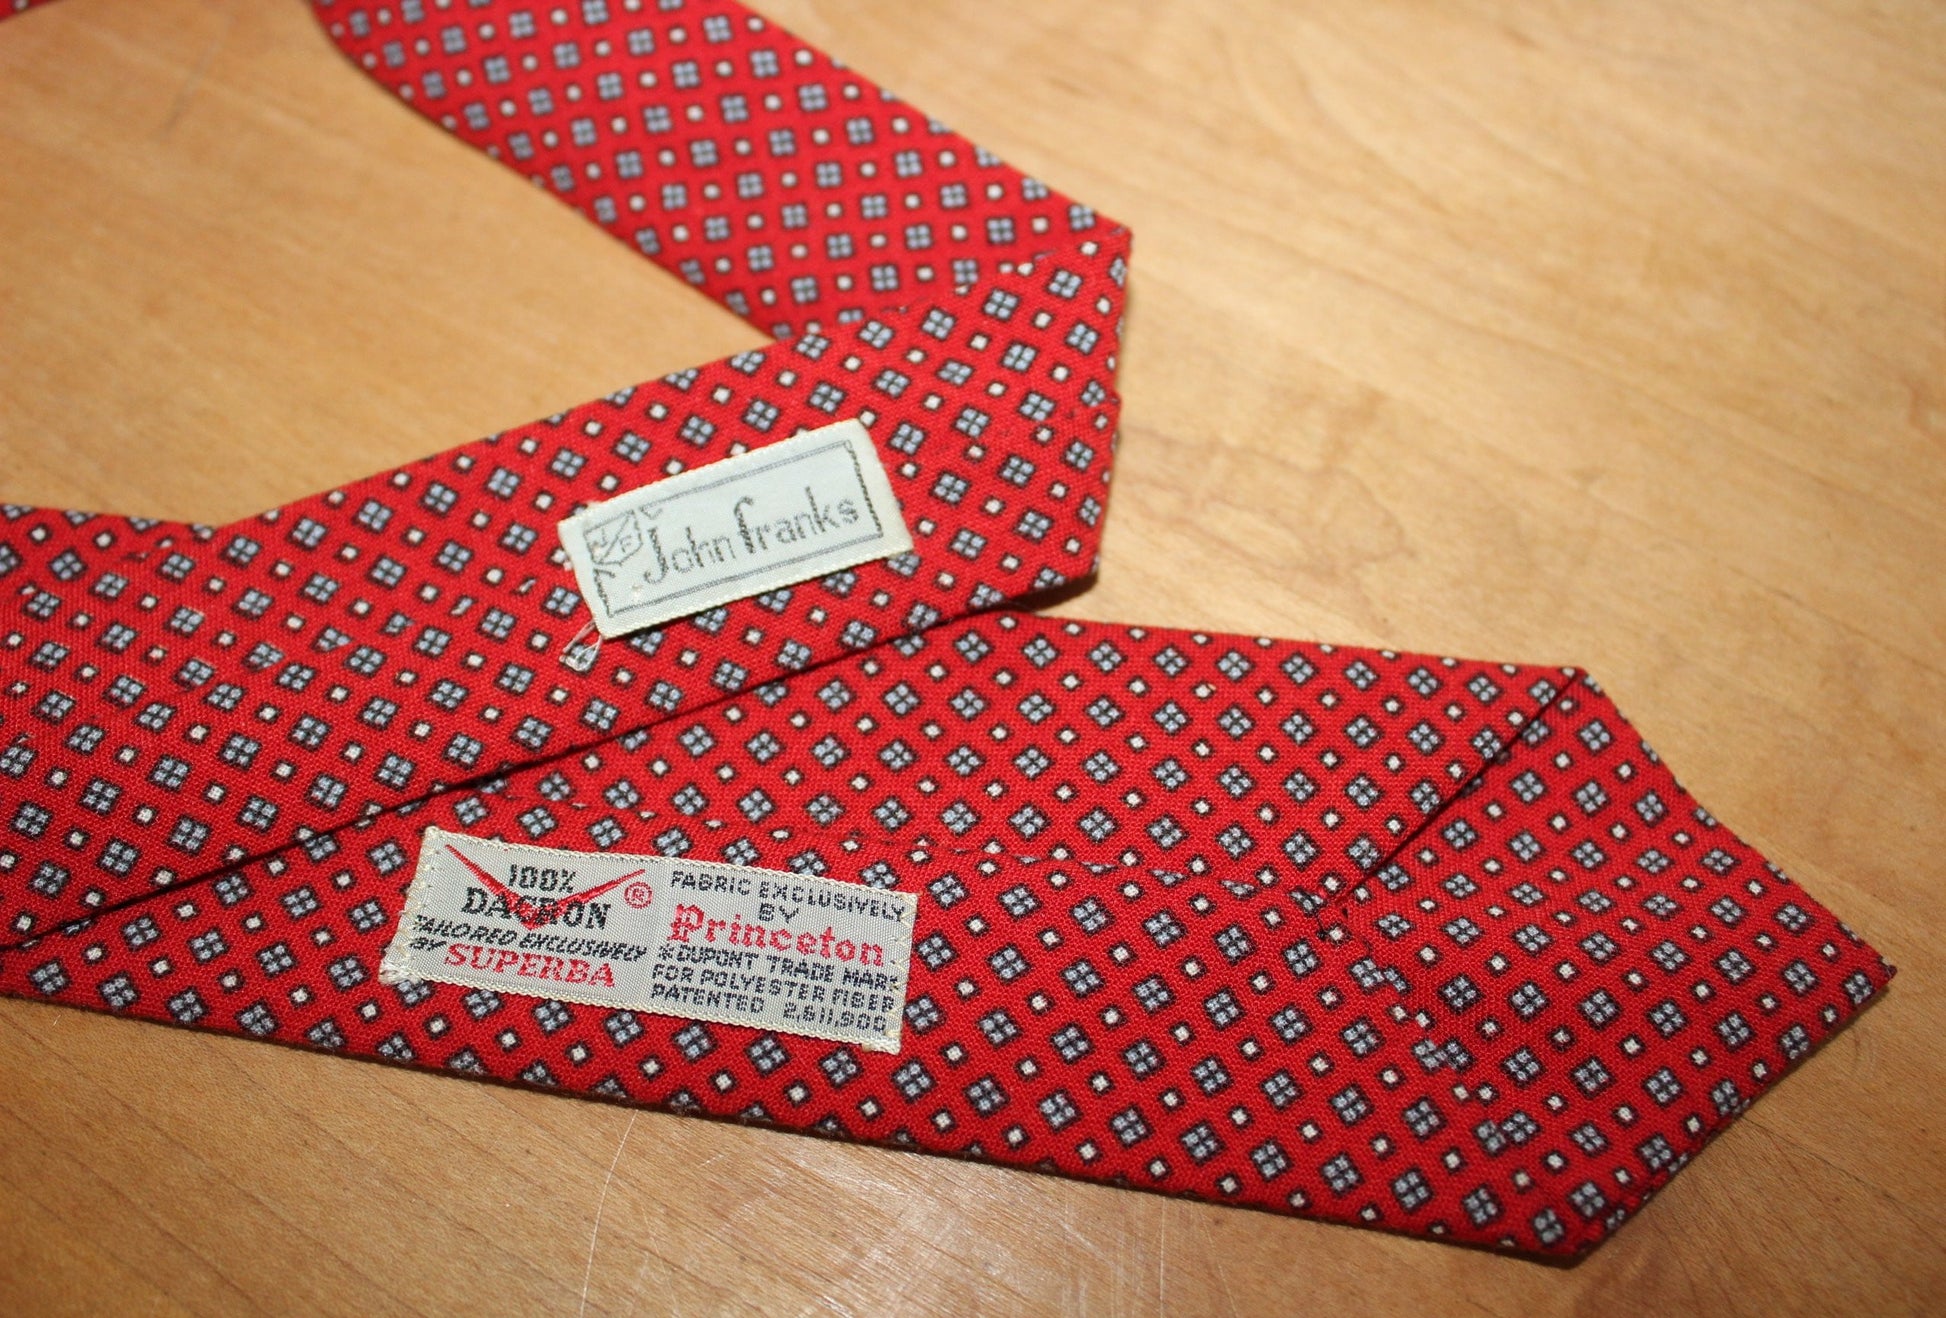 John Franks Dacron Vintage Necktie - Superba Narrow 2 34" Deep Red Classic black whiste design